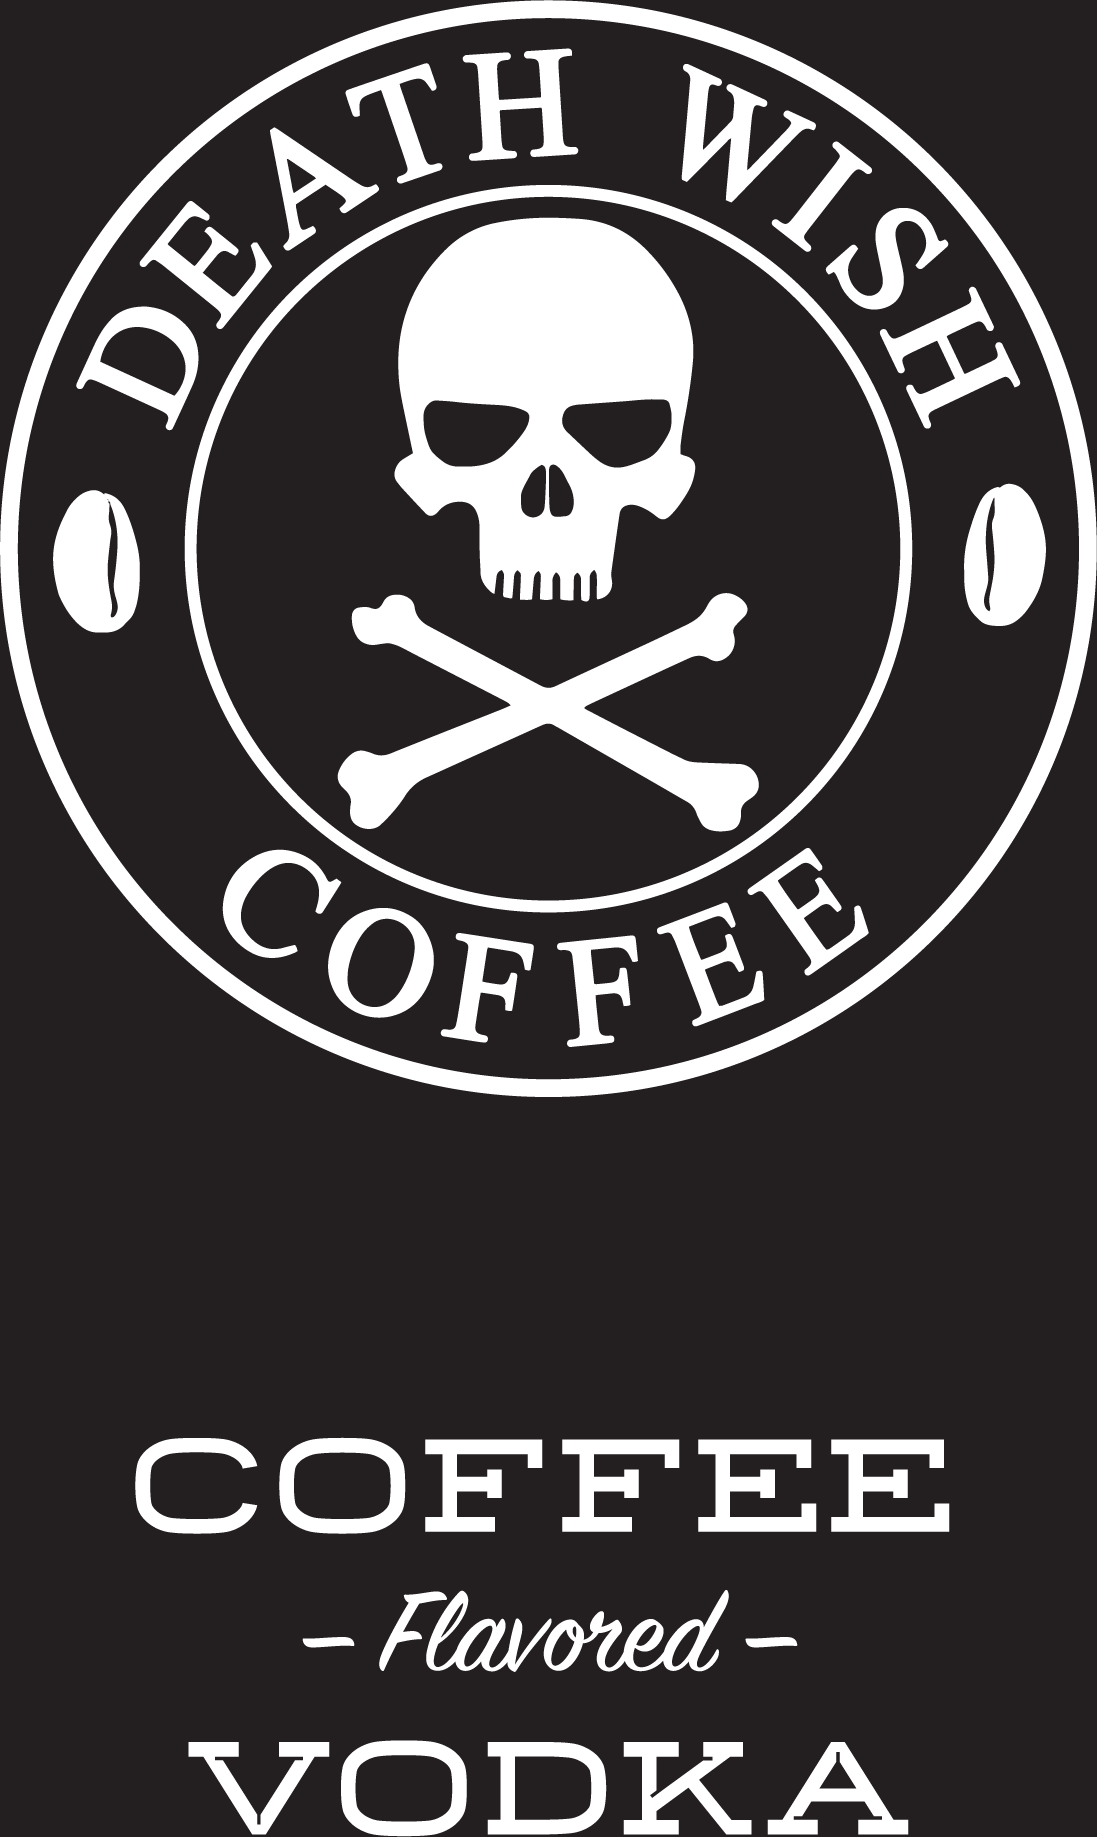 Death Wish Coffee Logo - Albany Distilling Co Wish Coffee Streak Wines & Spirits